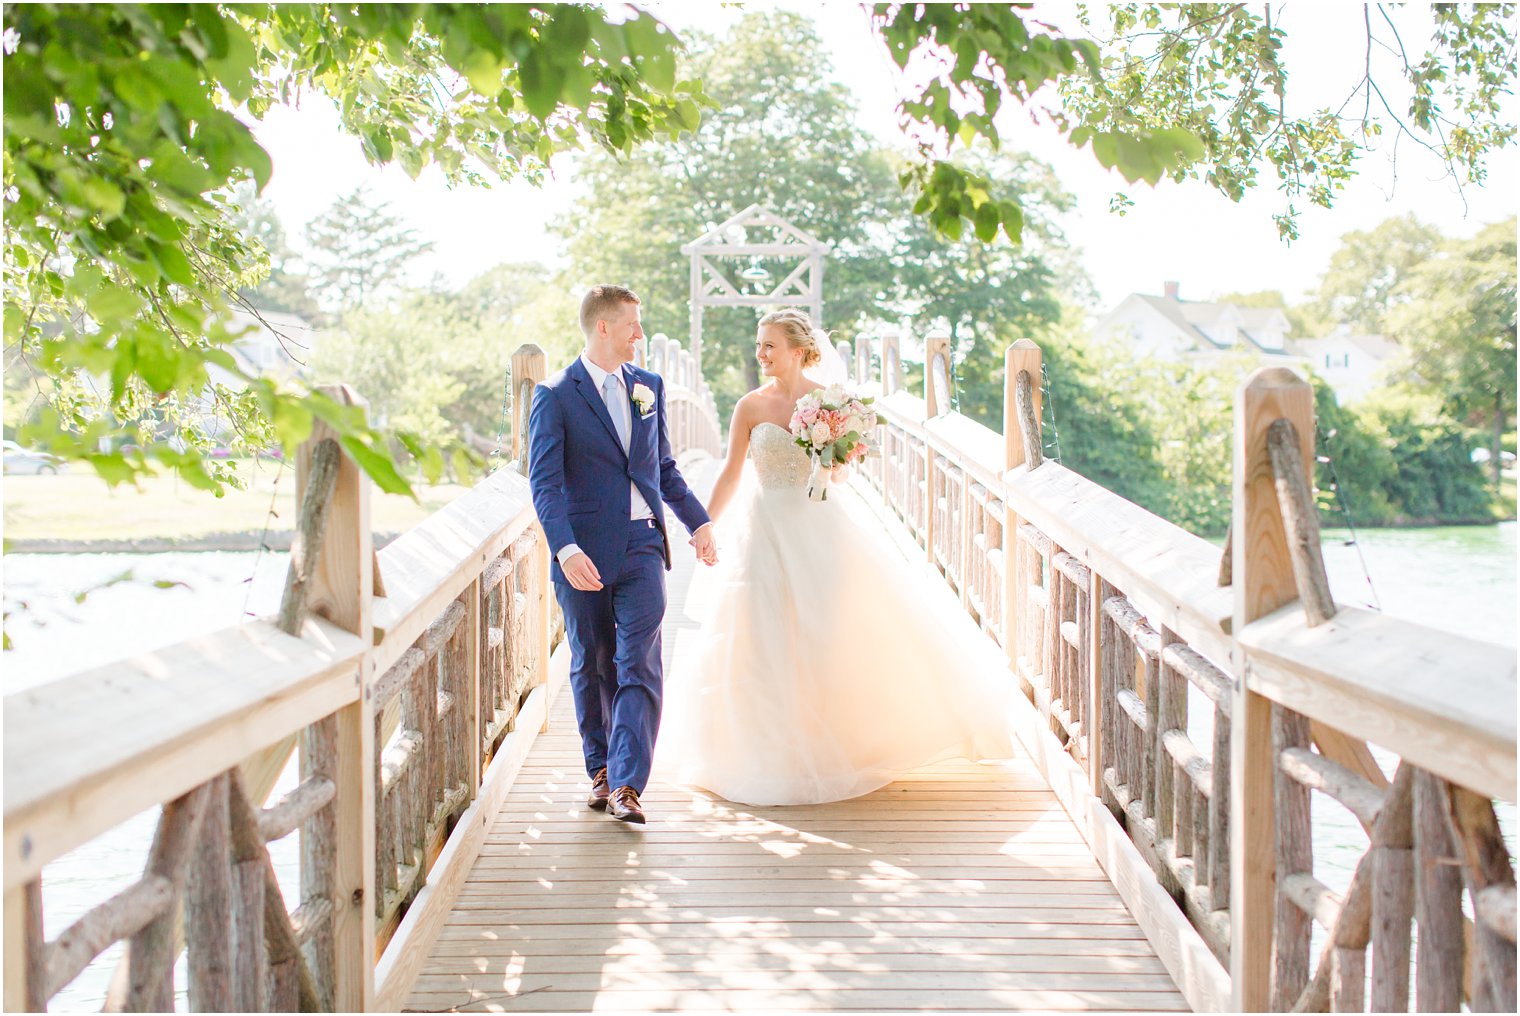 candid photo of bride and groom walking on bridge